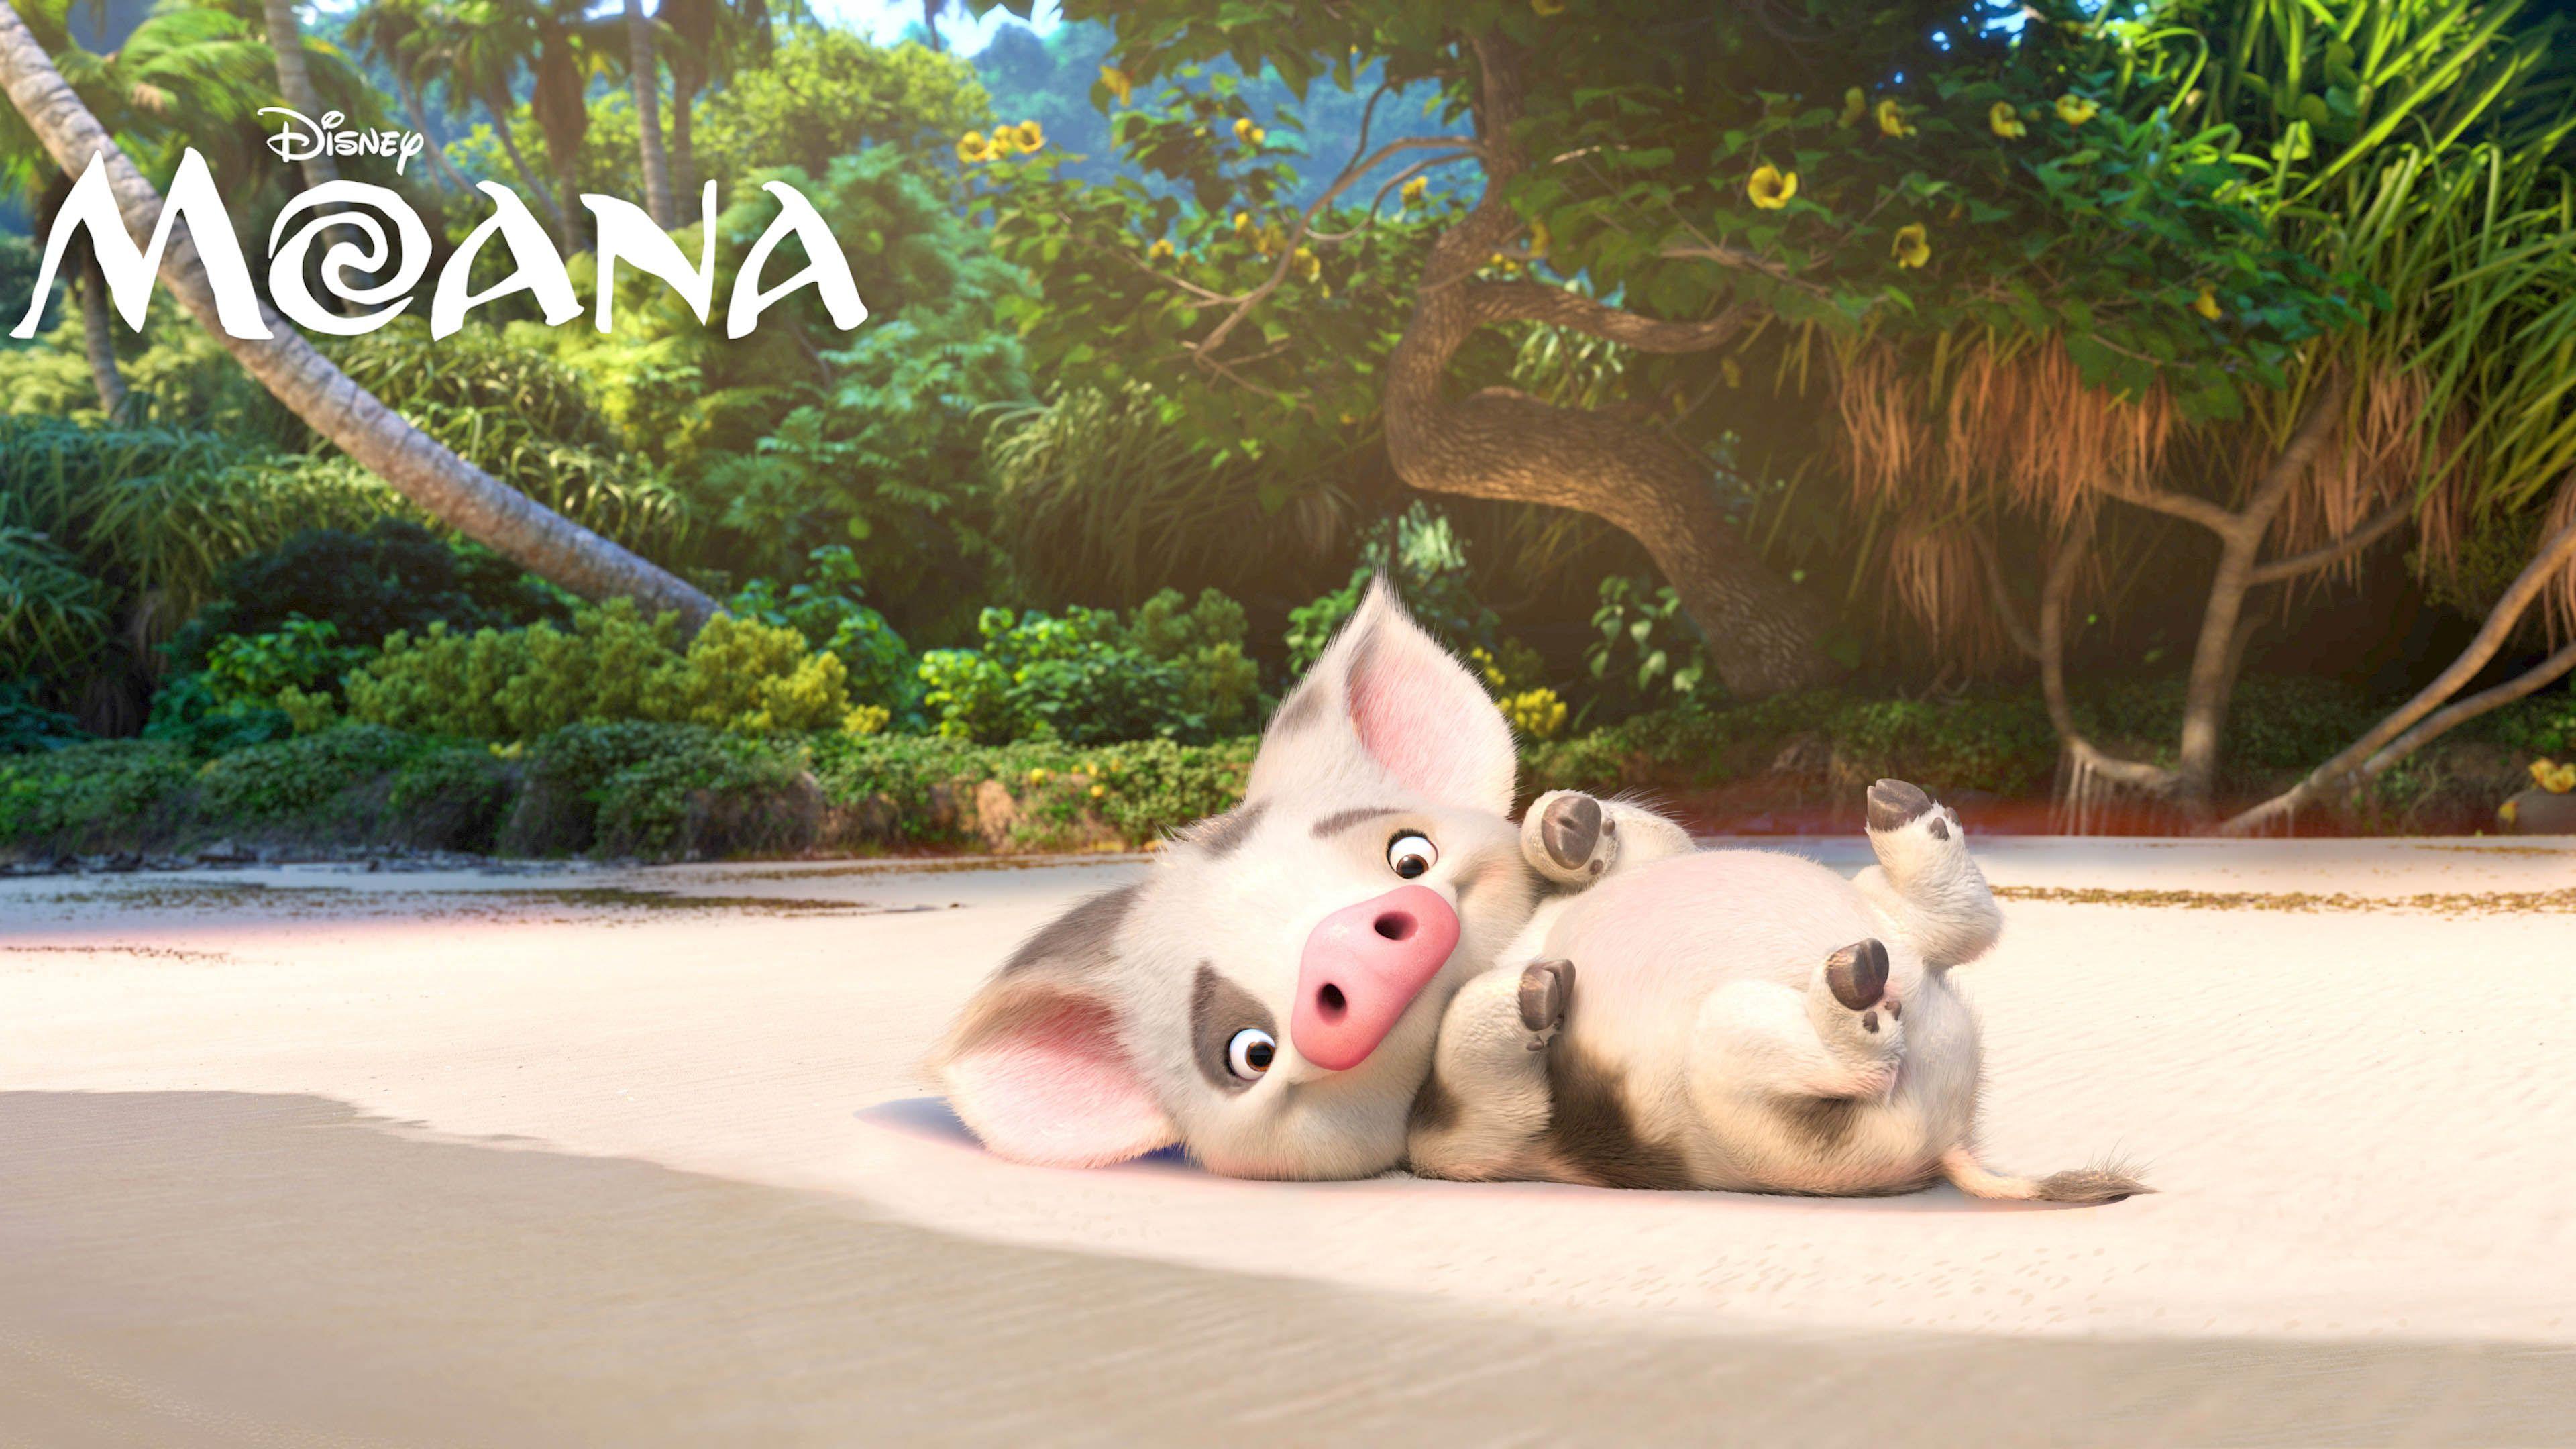 Pua The Pig Moana Character Promo 16 9